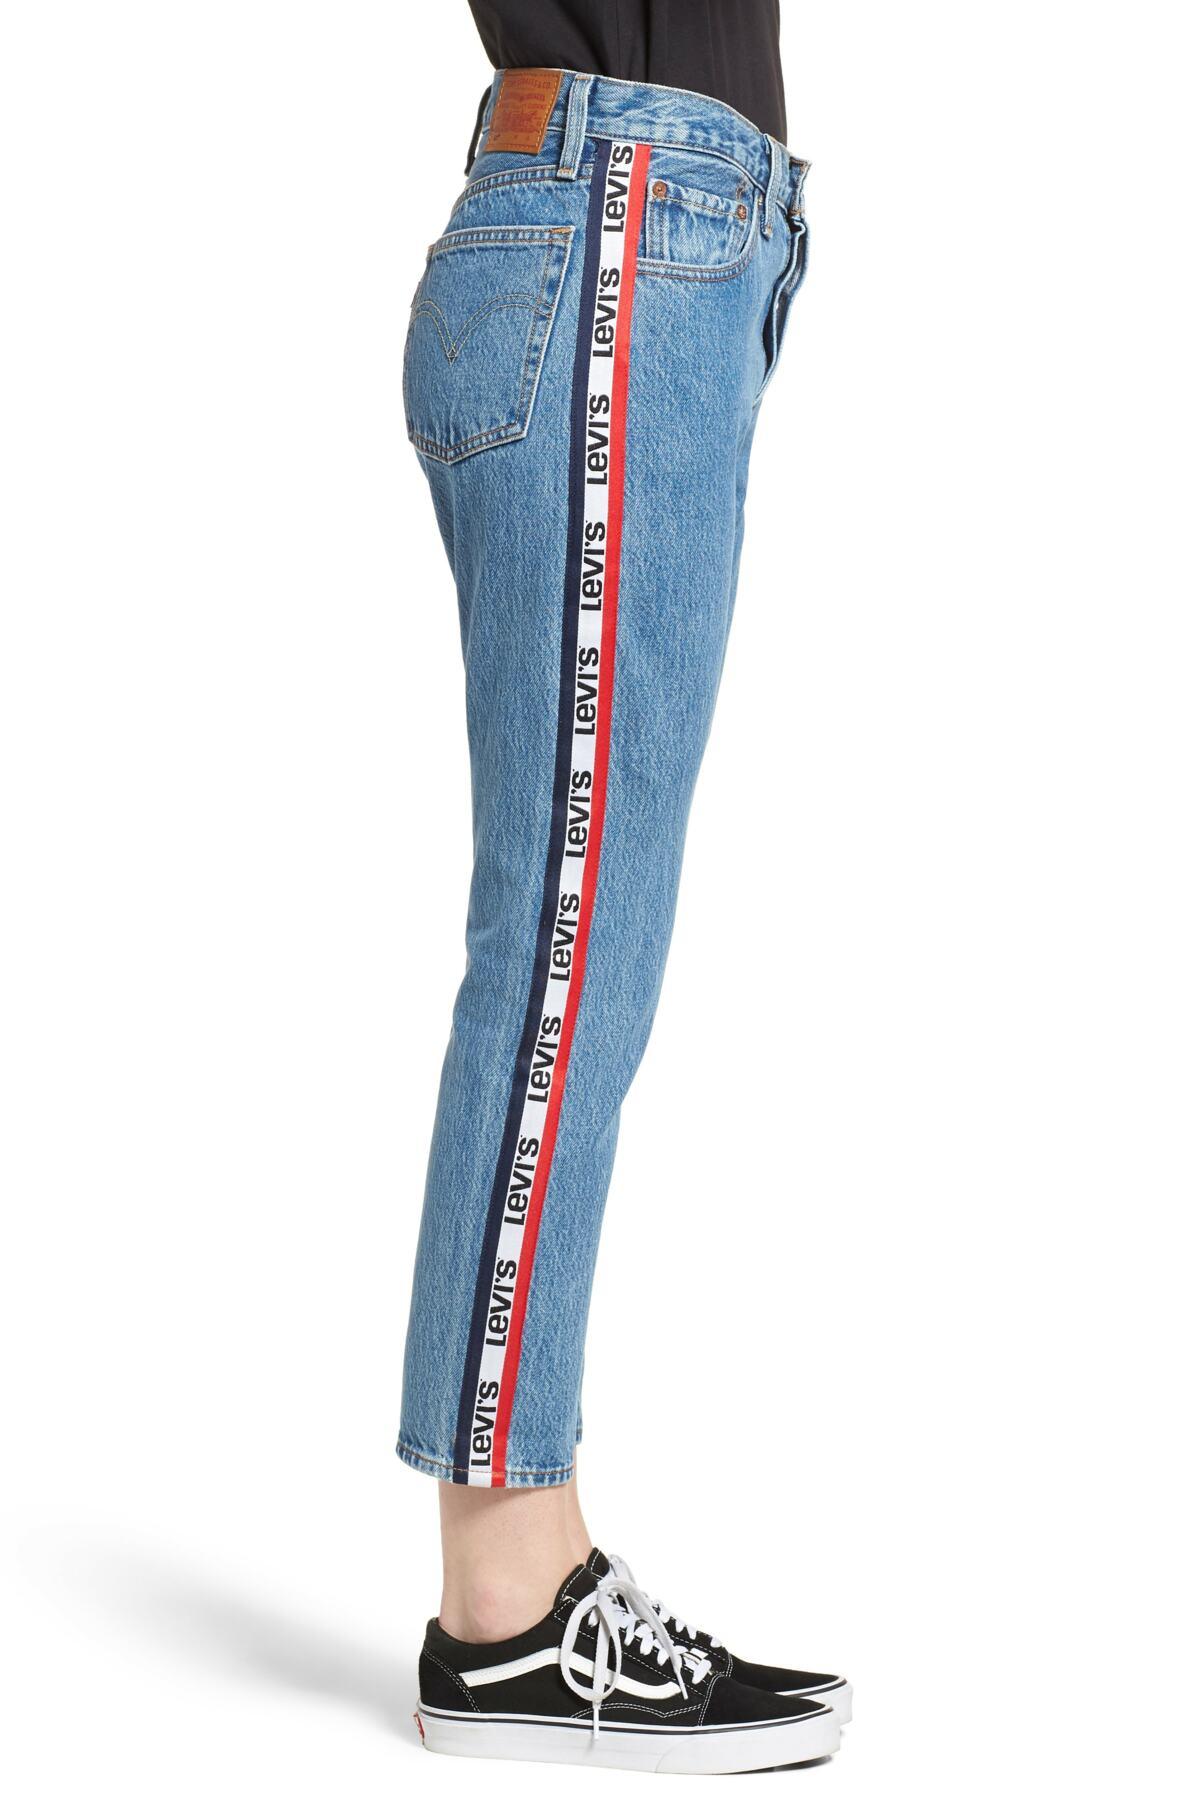 levis logo stripe jeans